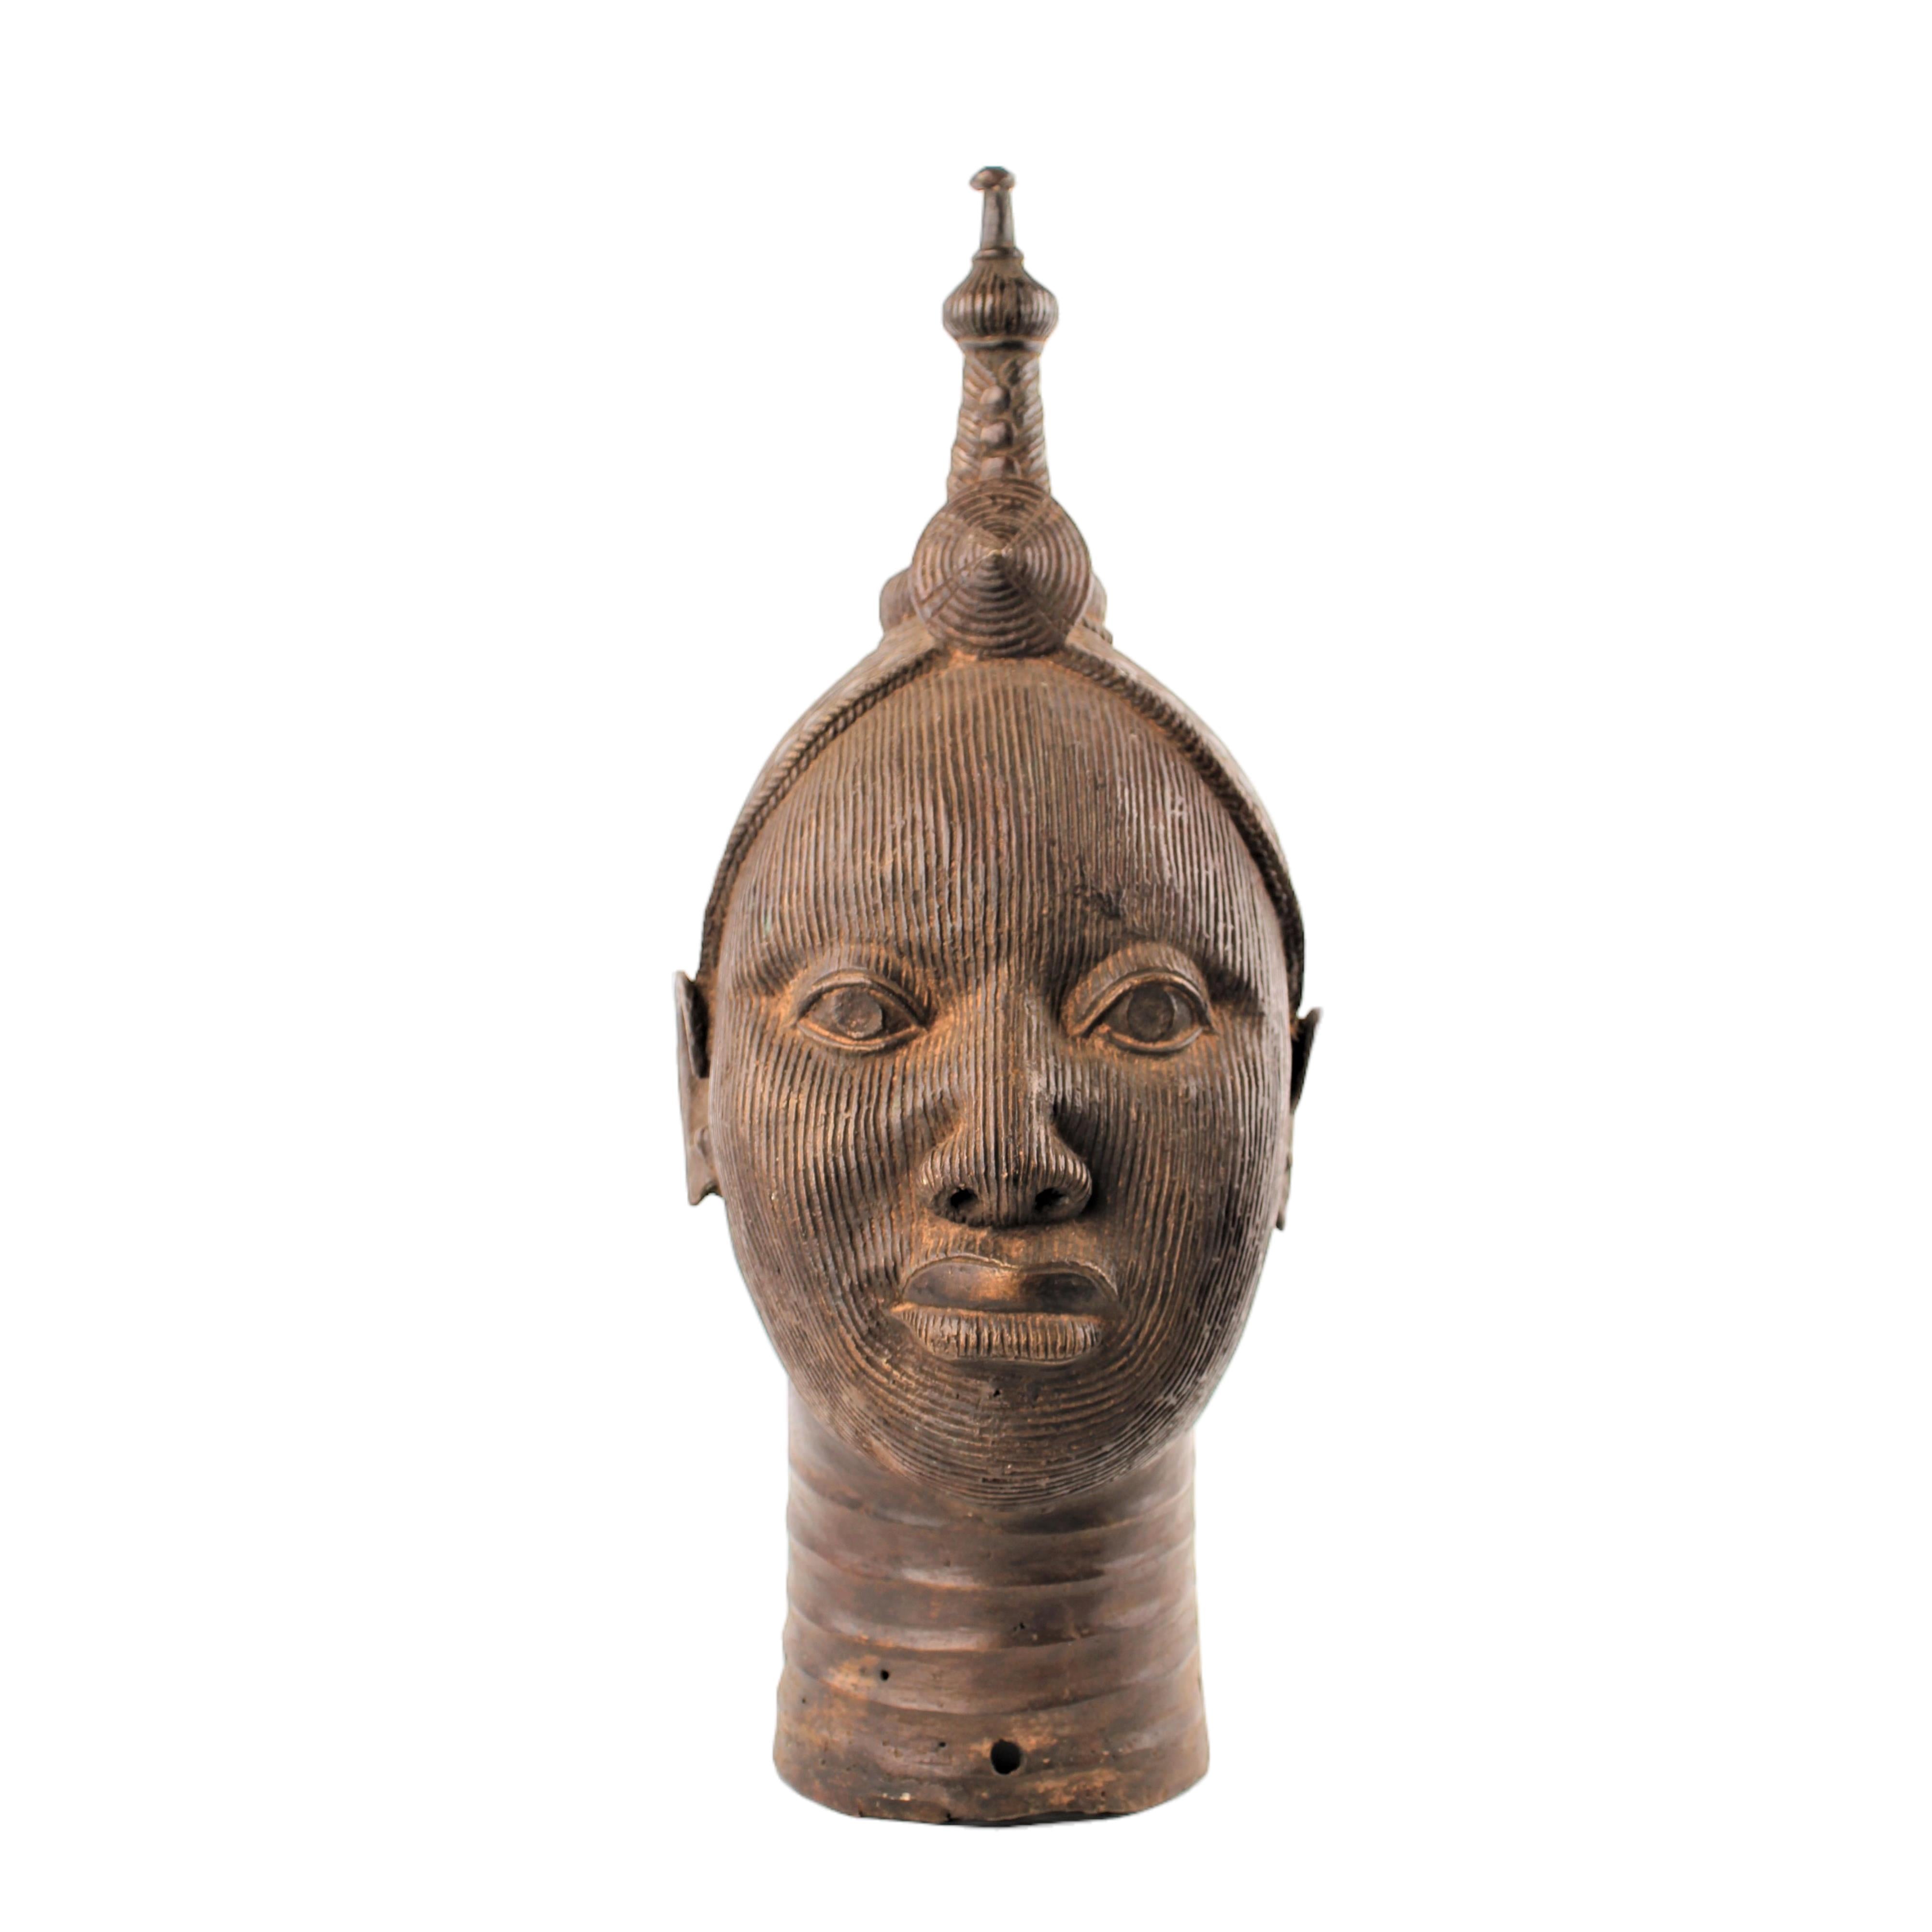 Yoruba Tribe Heads ~18.5" Tall - Heads